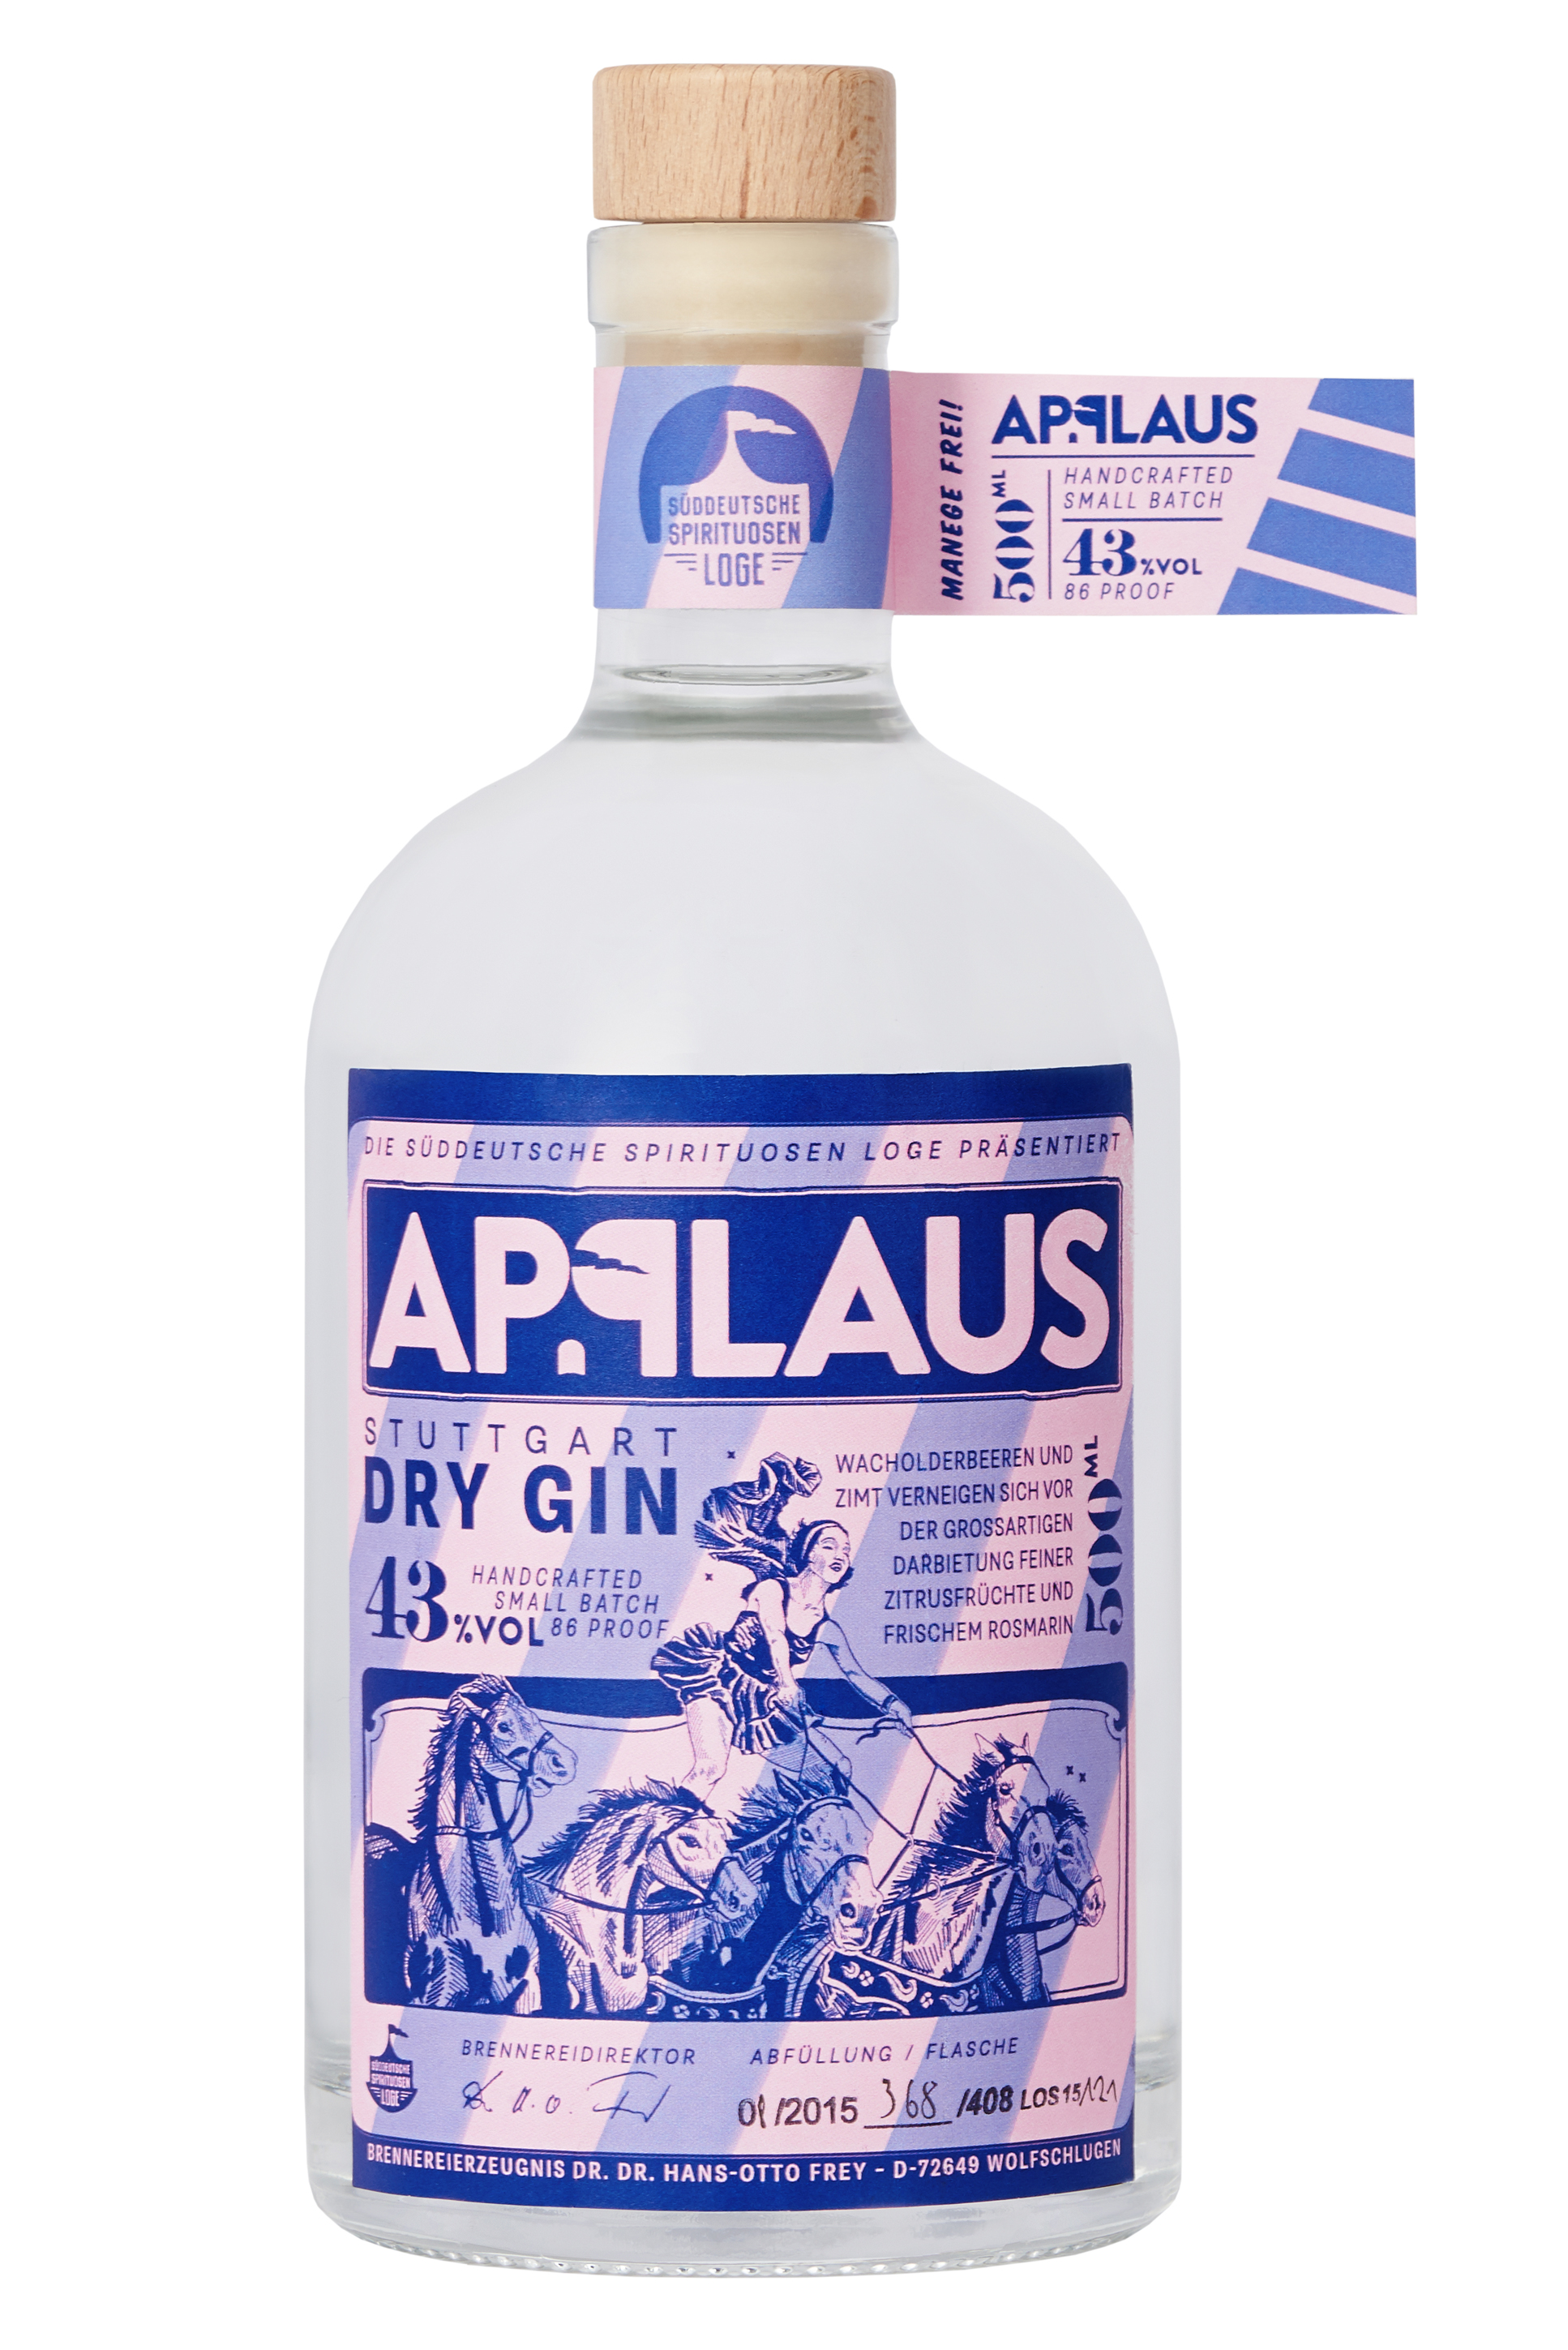 Applaus - Original - Dry Gin 0,5l 43%vol.